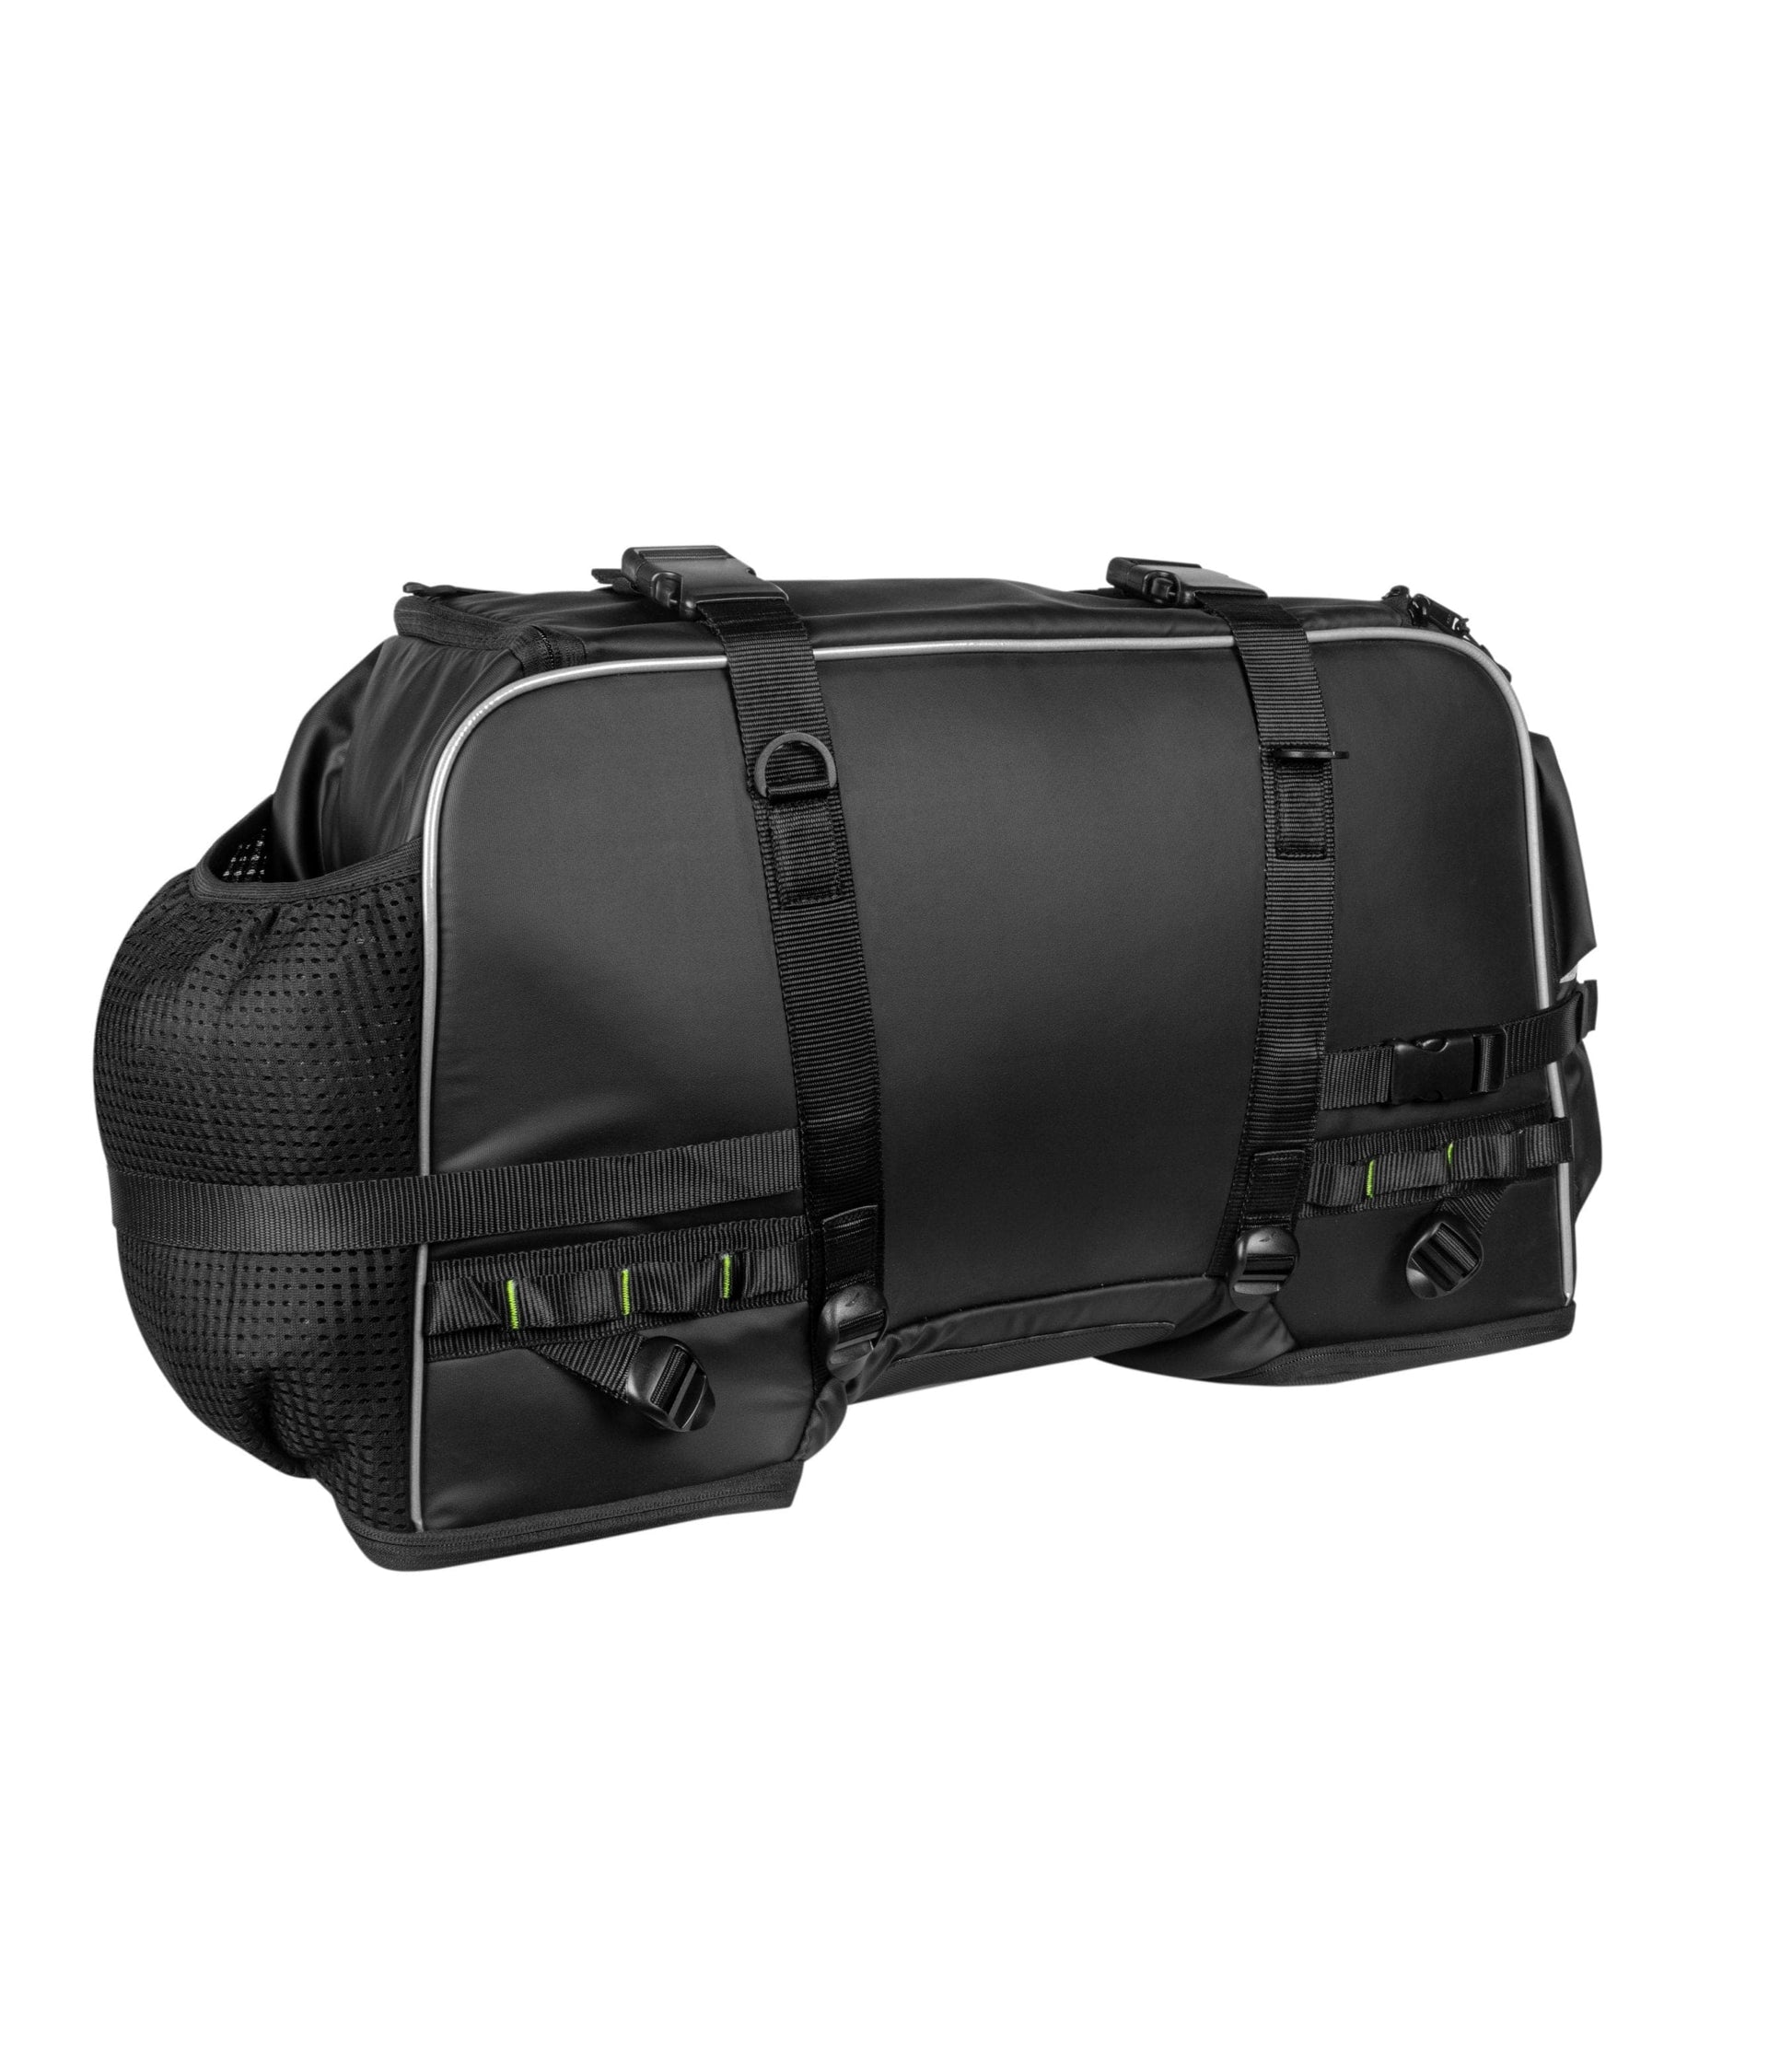 Rynox Grab Hybrid Tailbag Stormproof - Destination Moto